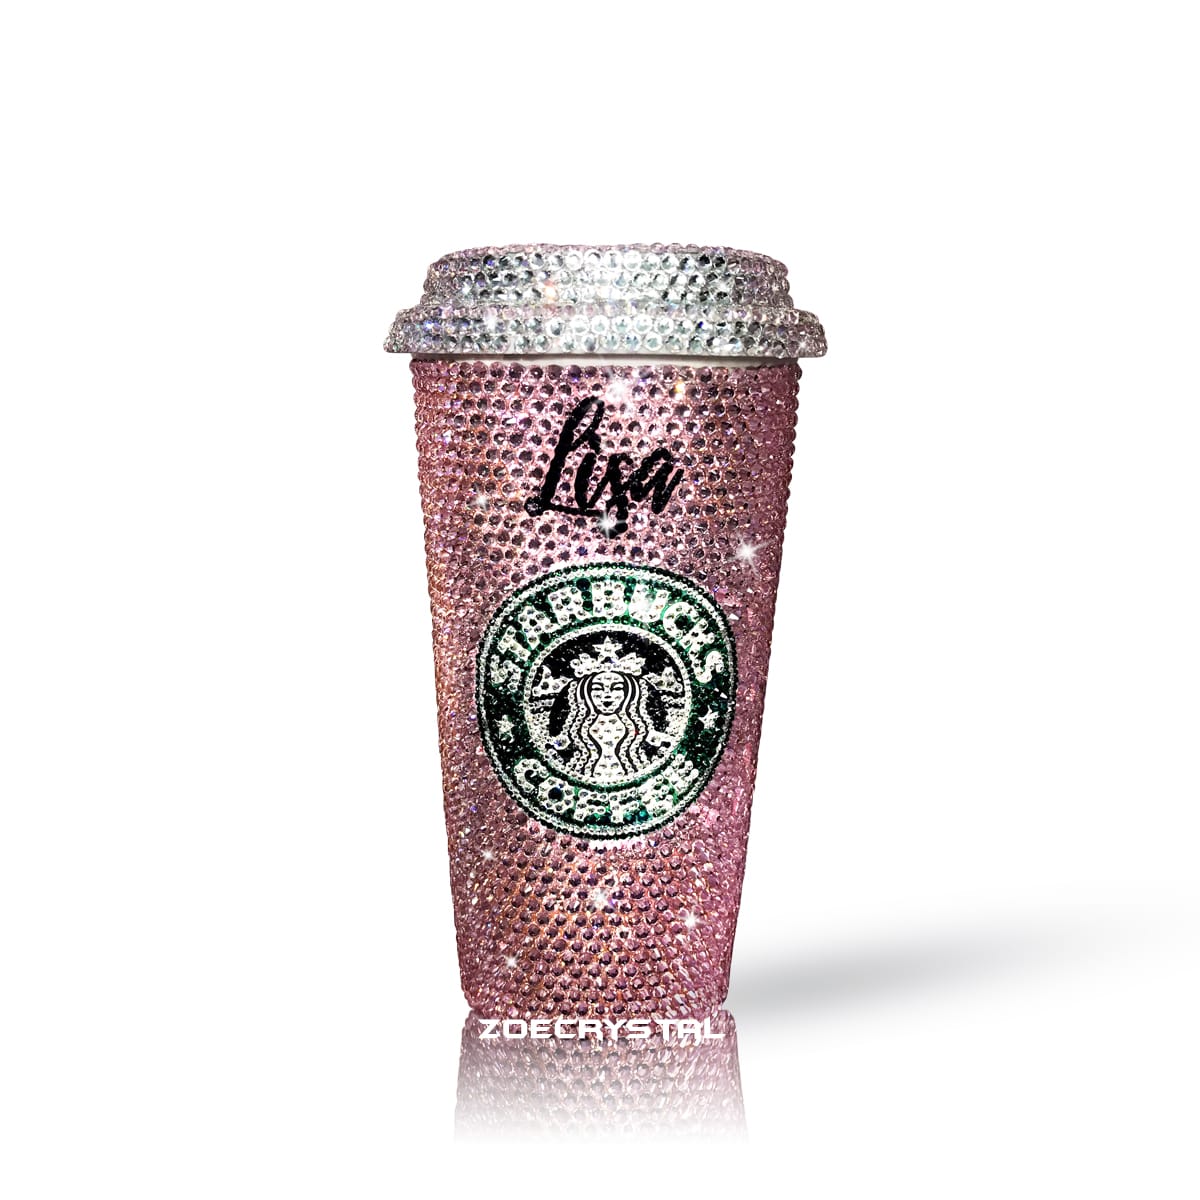 Starbucks Lover Sticker — Have a sparkly day!